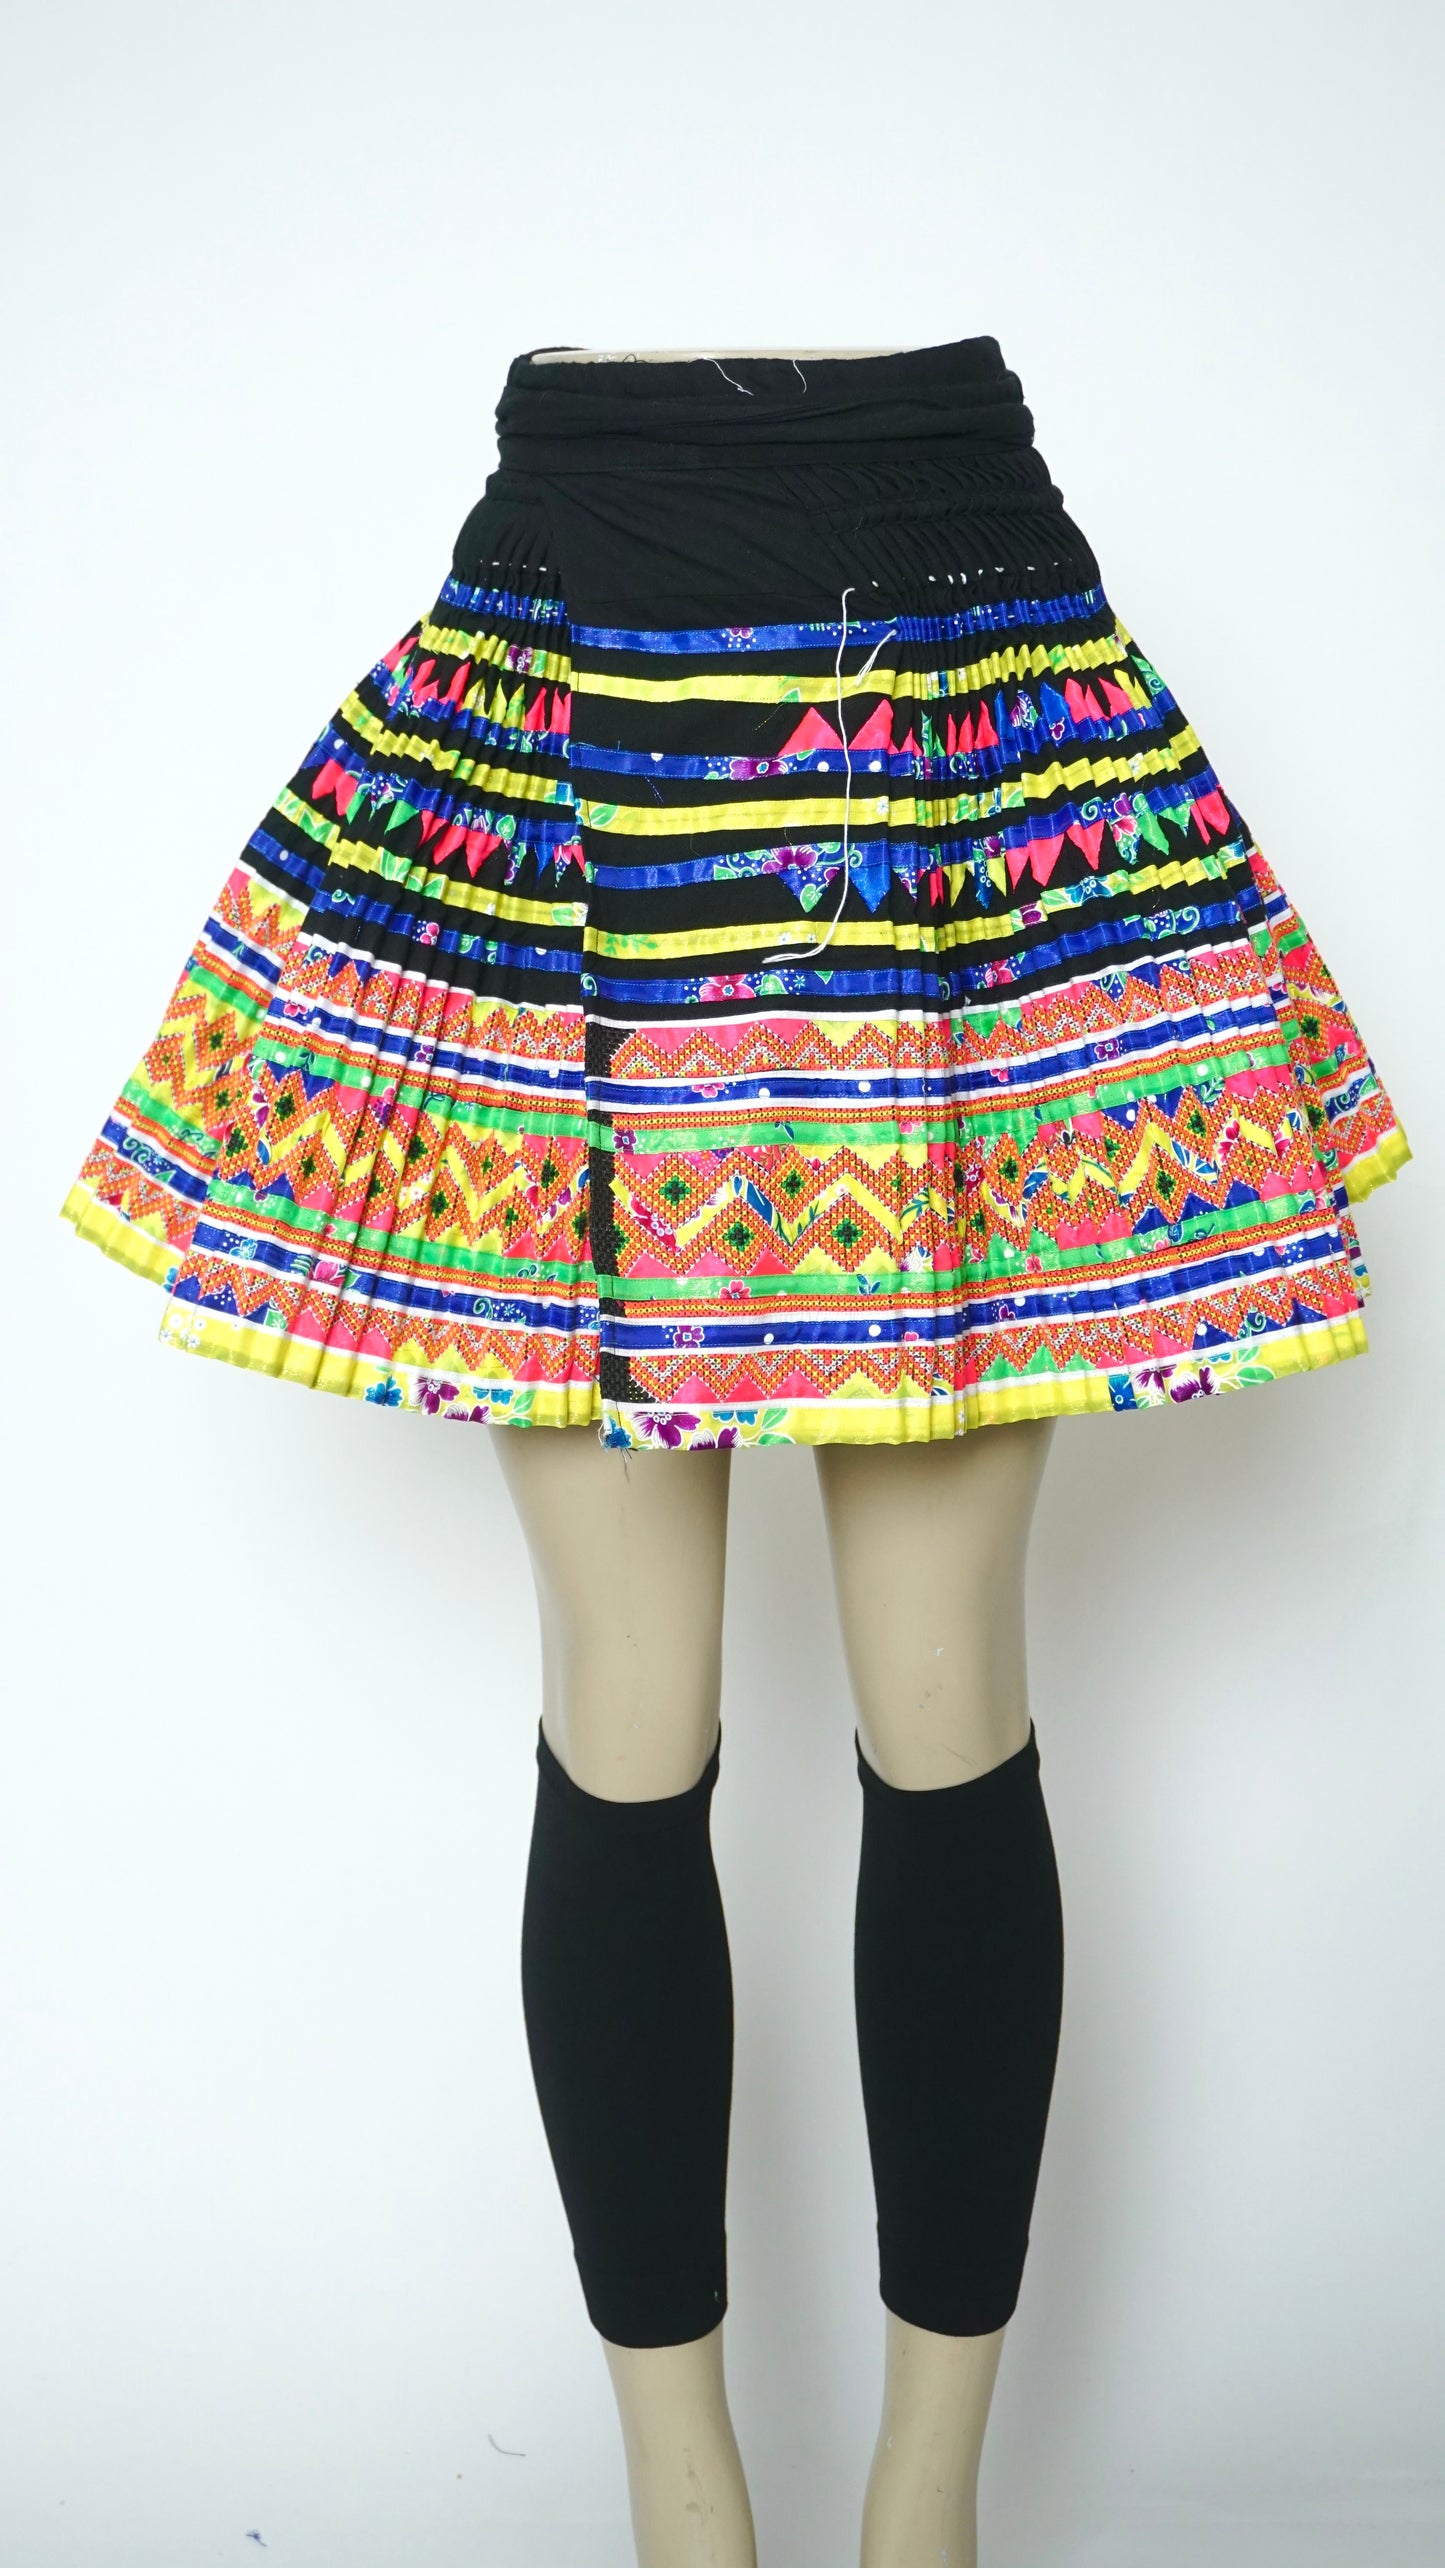 Hmong Leeg Handmade Skirt (42x18)